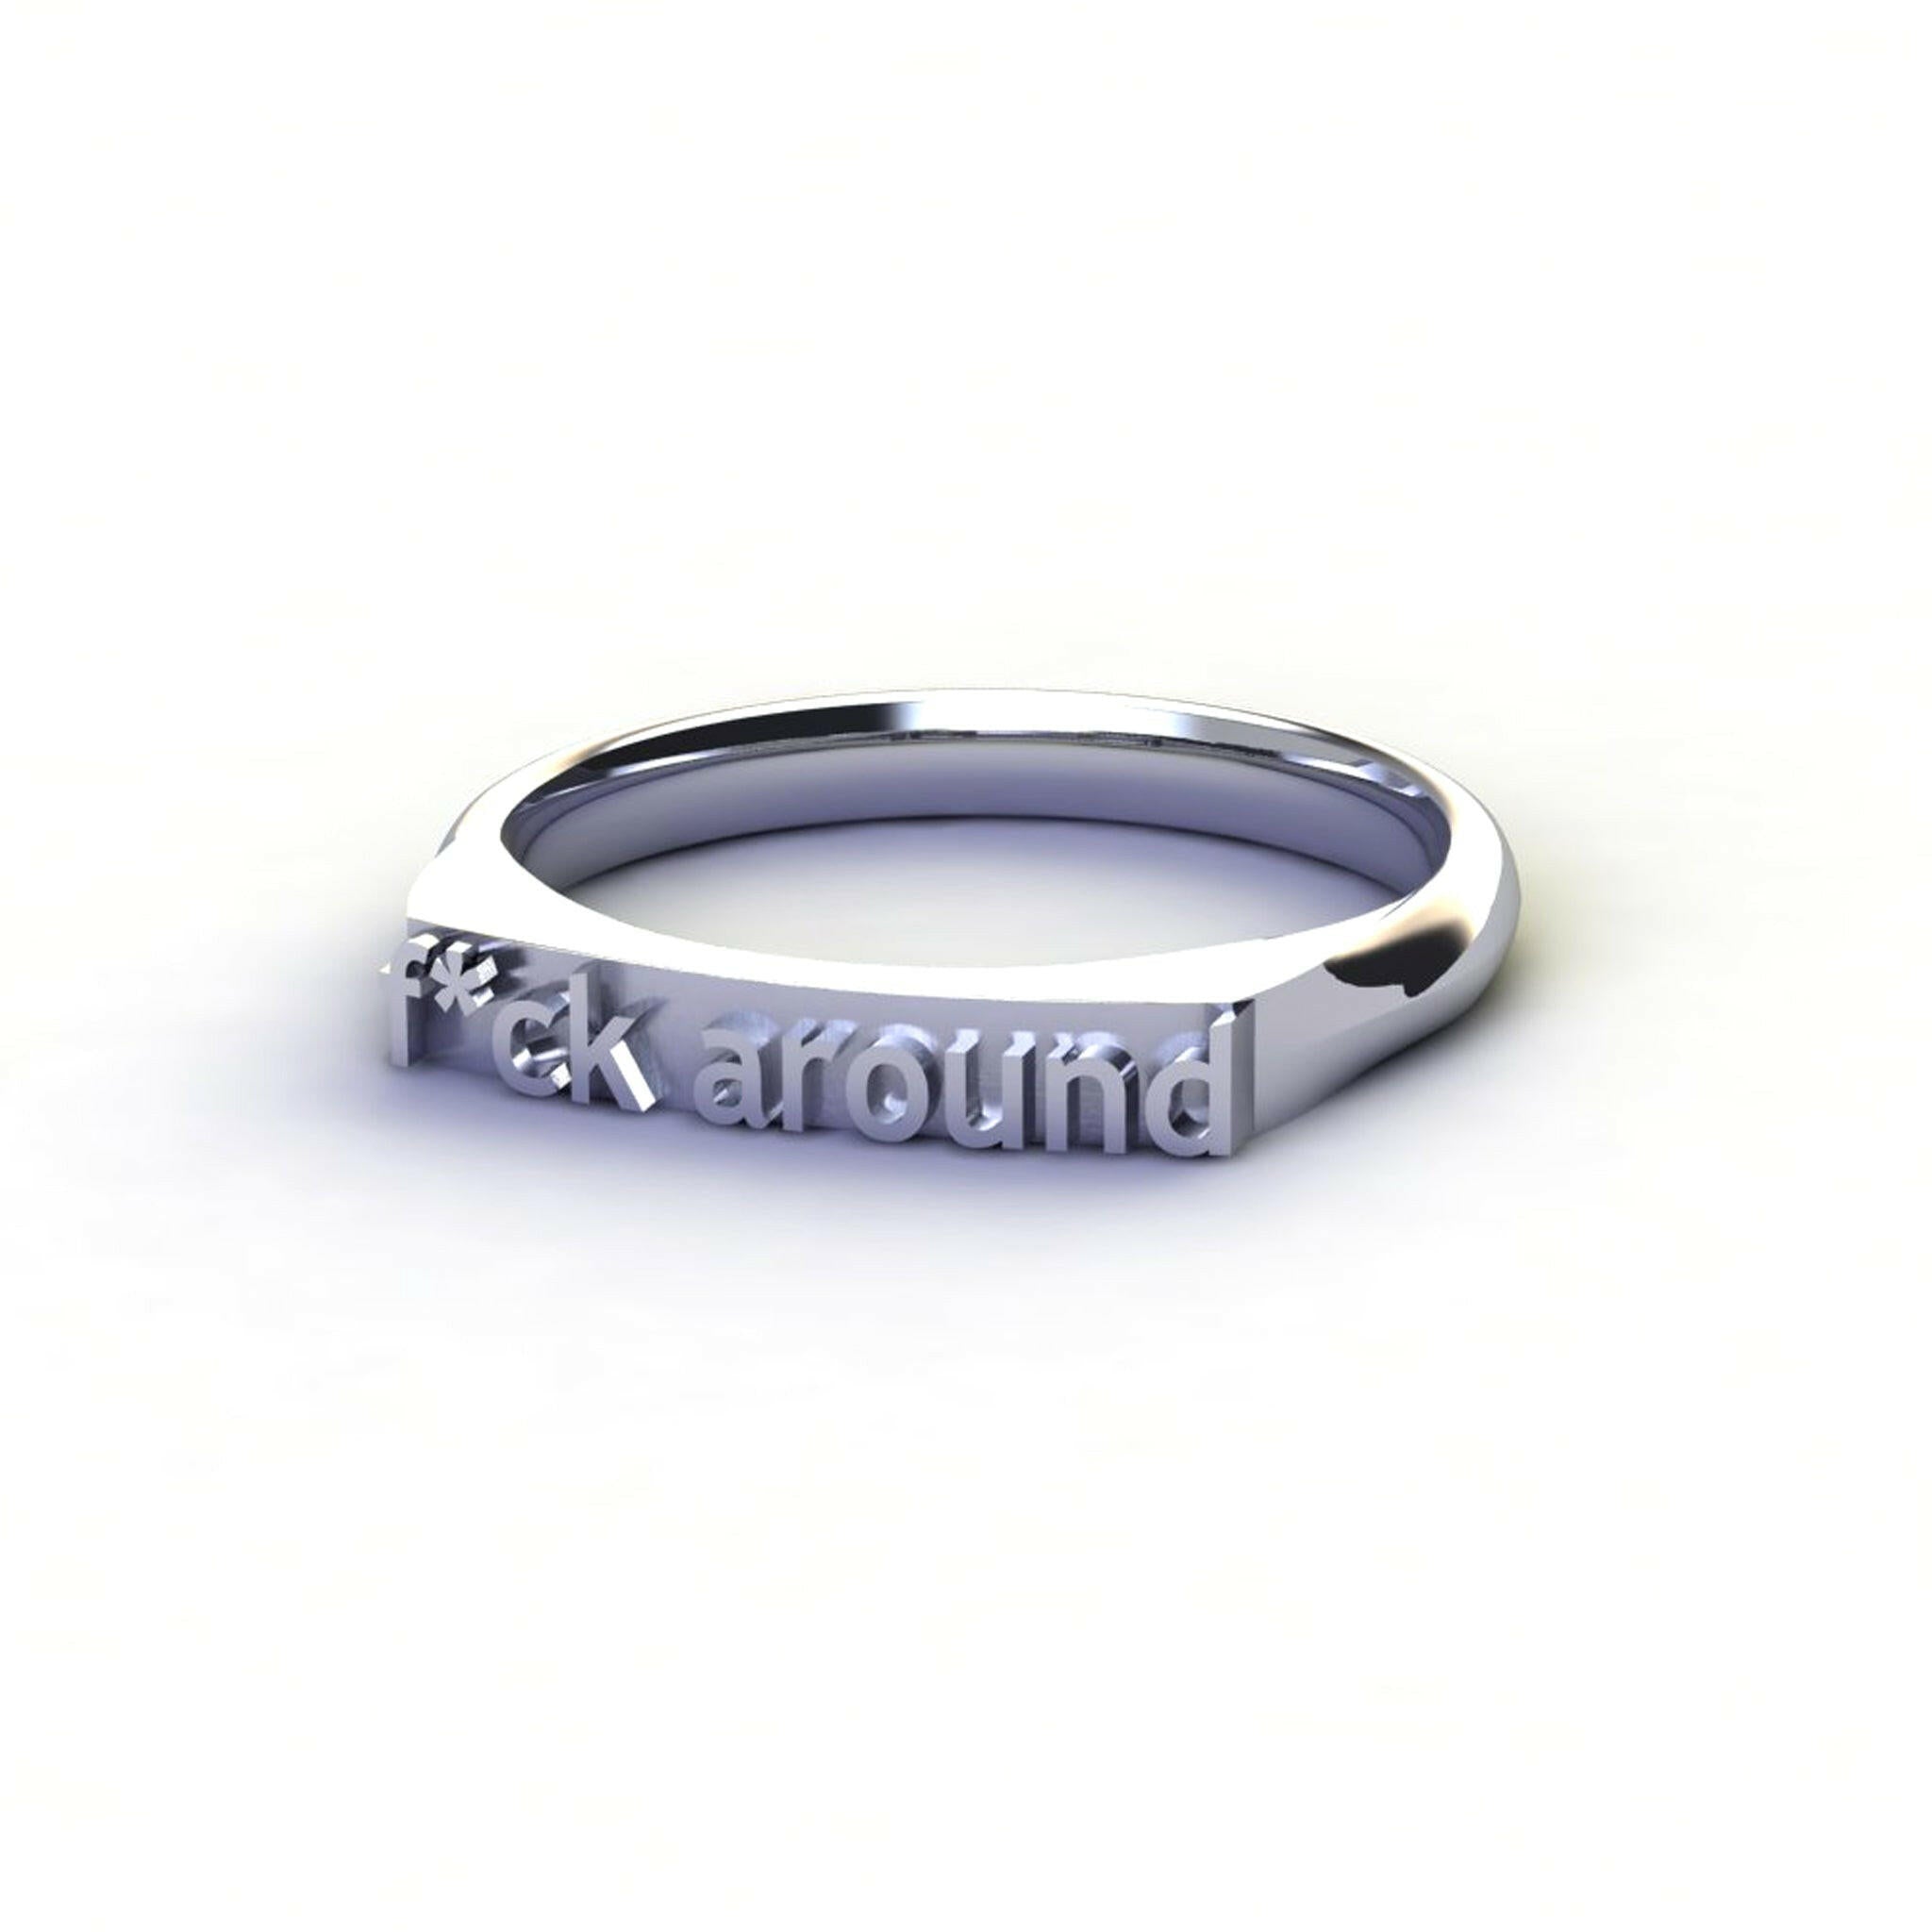 f*ck around - Ilah Cibis Jewelry-Rings